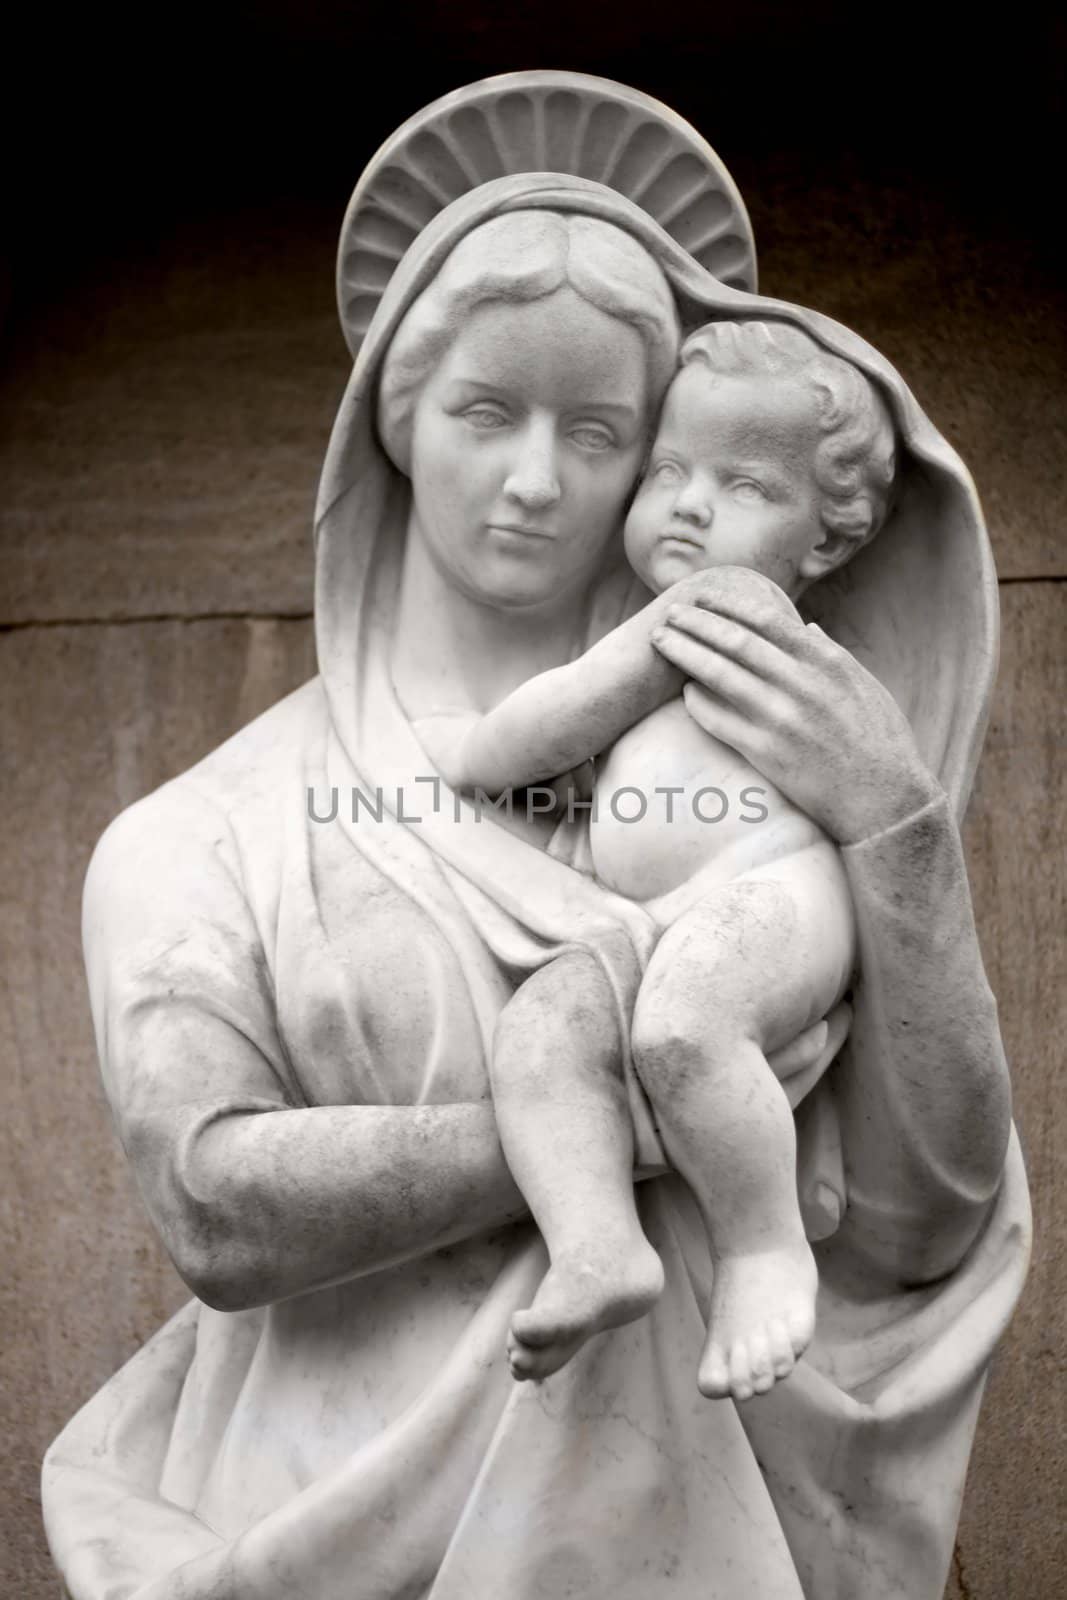 Virgin Mary with baby Jesus by Vladyslav